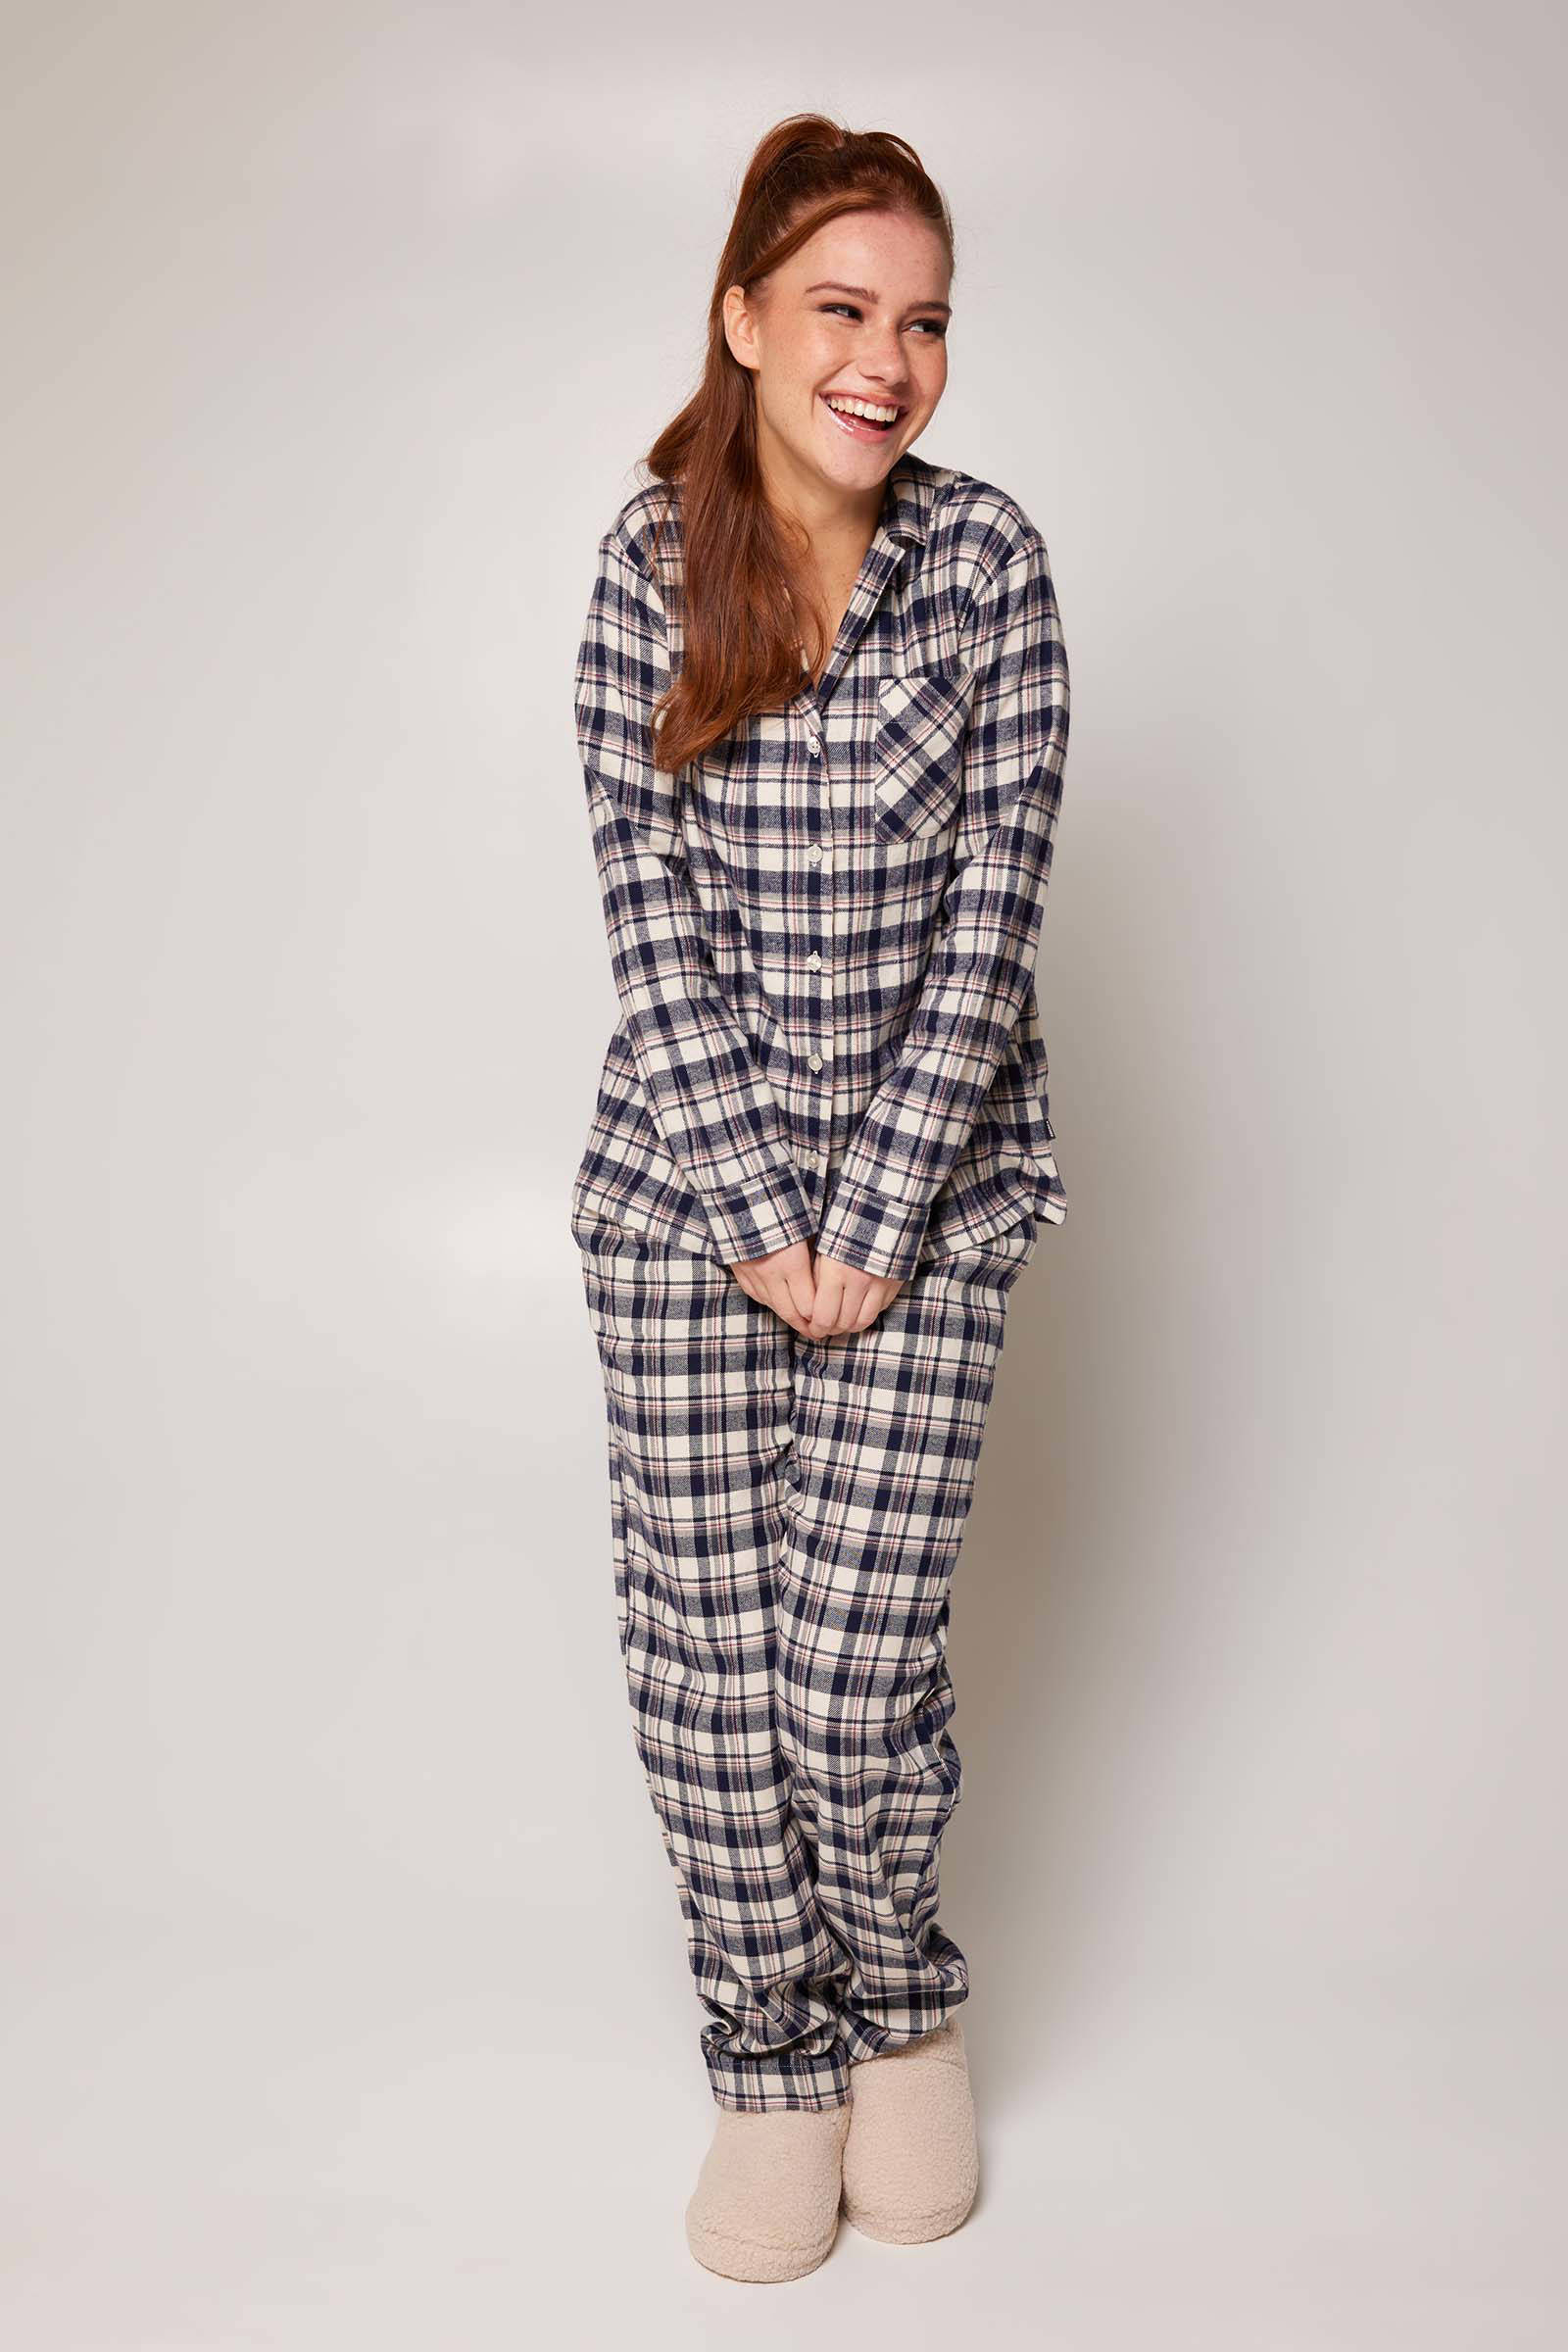 Kleding Dameskleding Pyjamas & Badjassen Pyjamashorts & Pyjamabroeken Labor Day Sale Adult Pyjama's Katoen pyjama Set Hoge Kwaliteit Katoen pyjama Hand Block Print Pj set Loungewear Geschenken voor haar Pjs 